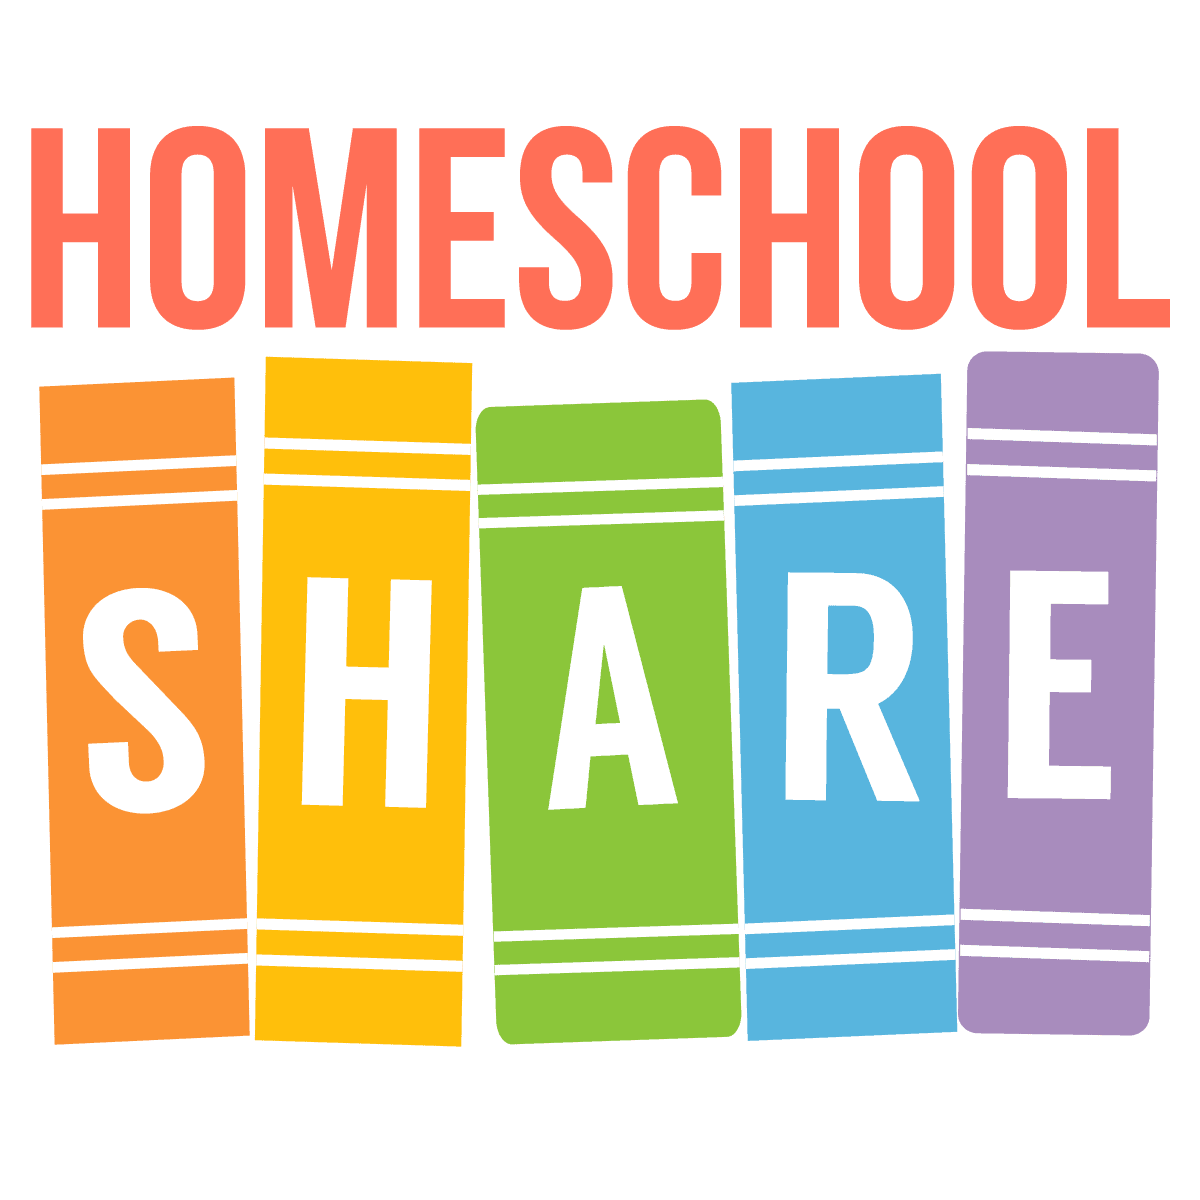 www.homeschoolshare.com